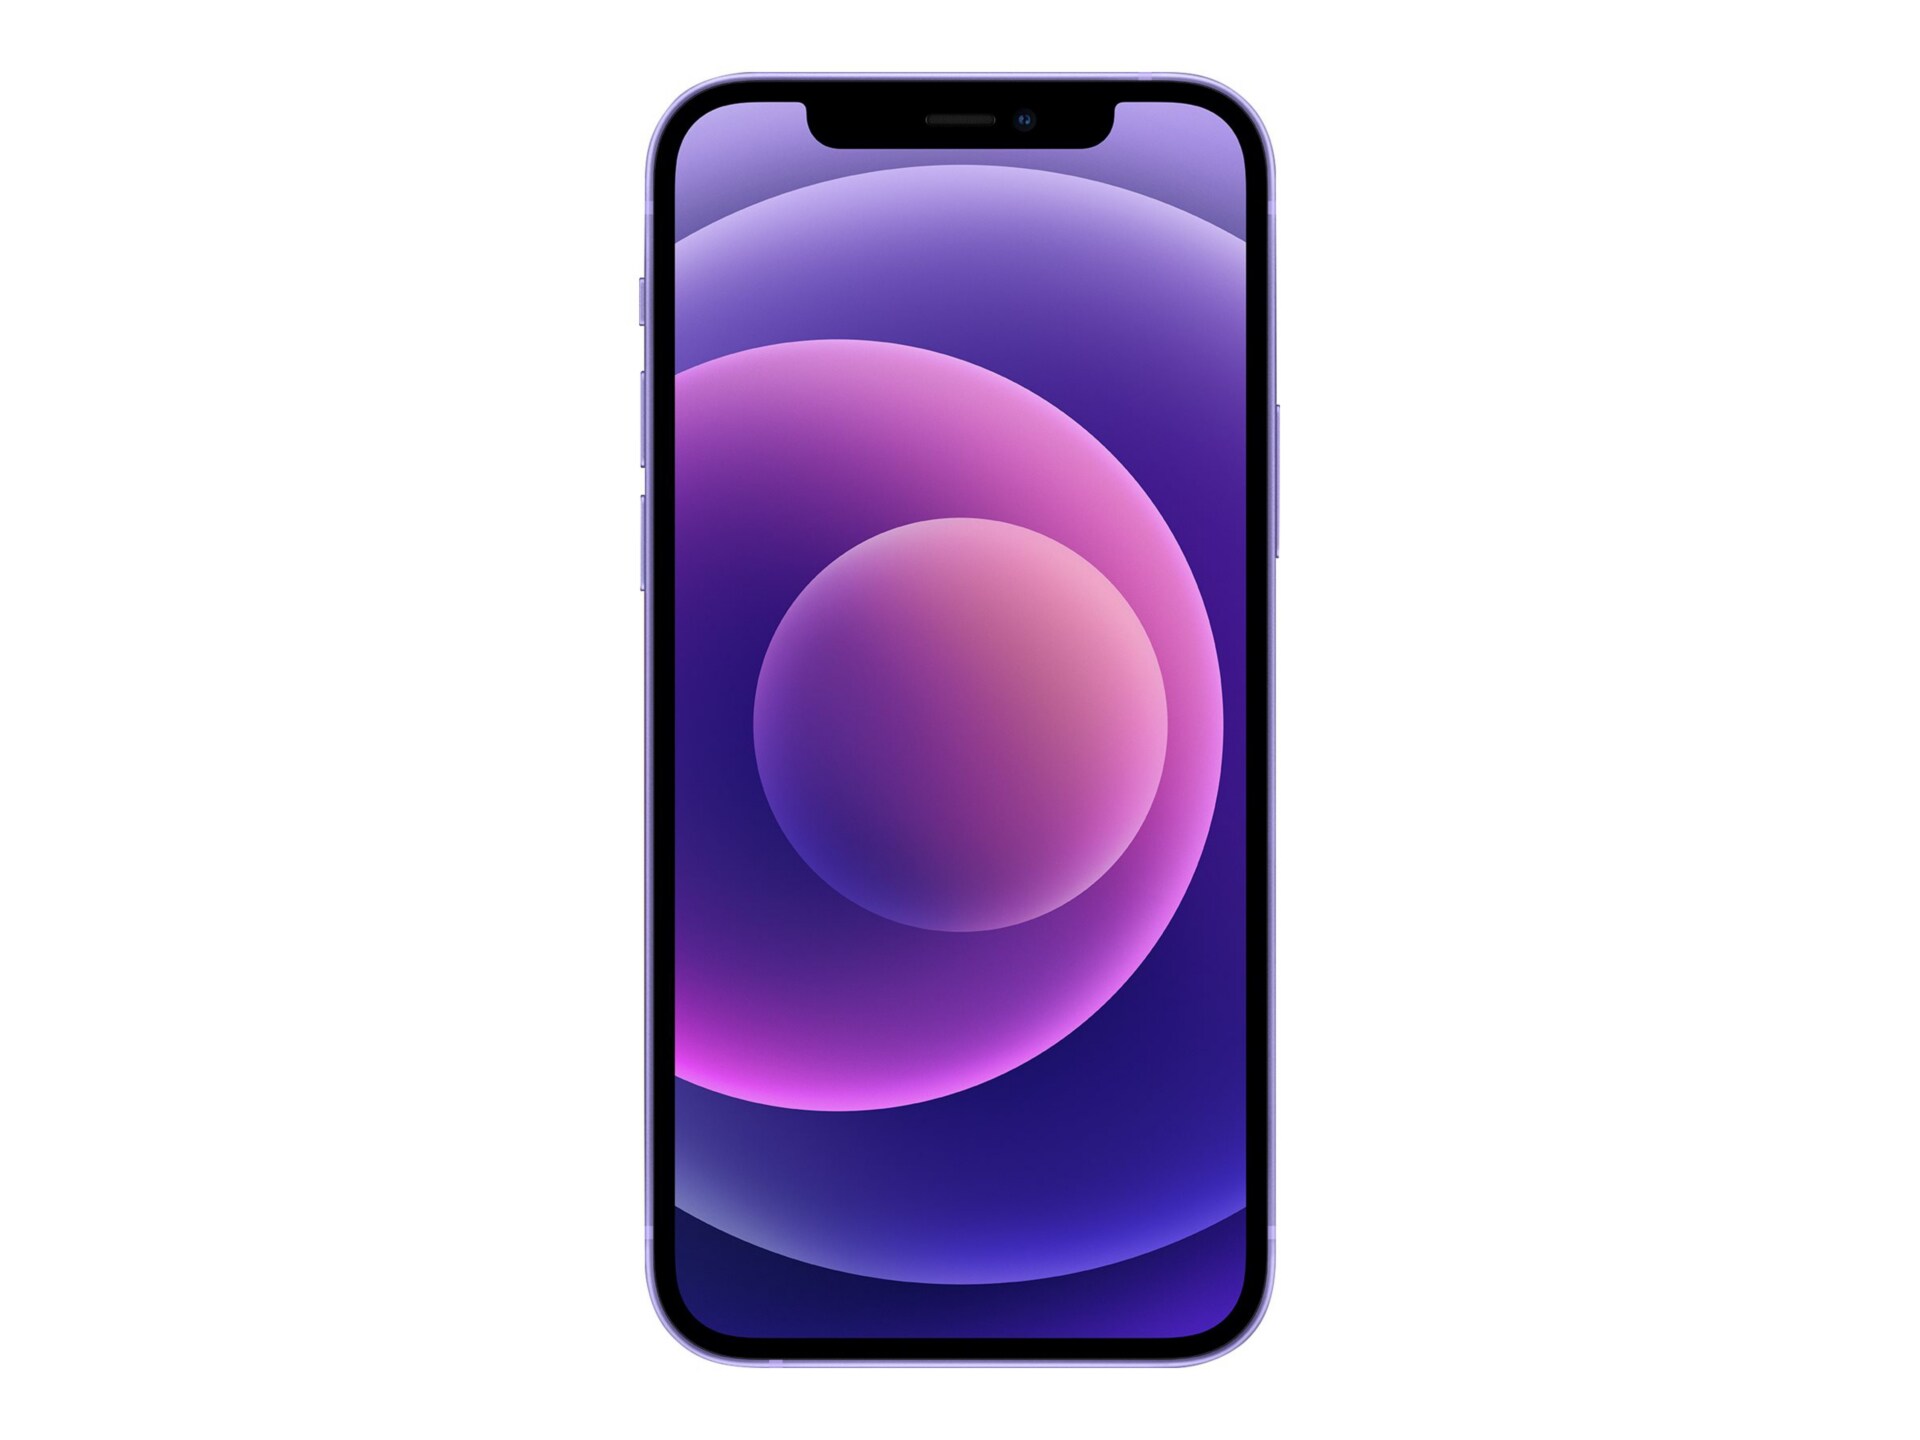 Apple iPhone 12 - purple - 5G smartphone - 64 GB - CDMA / GSM